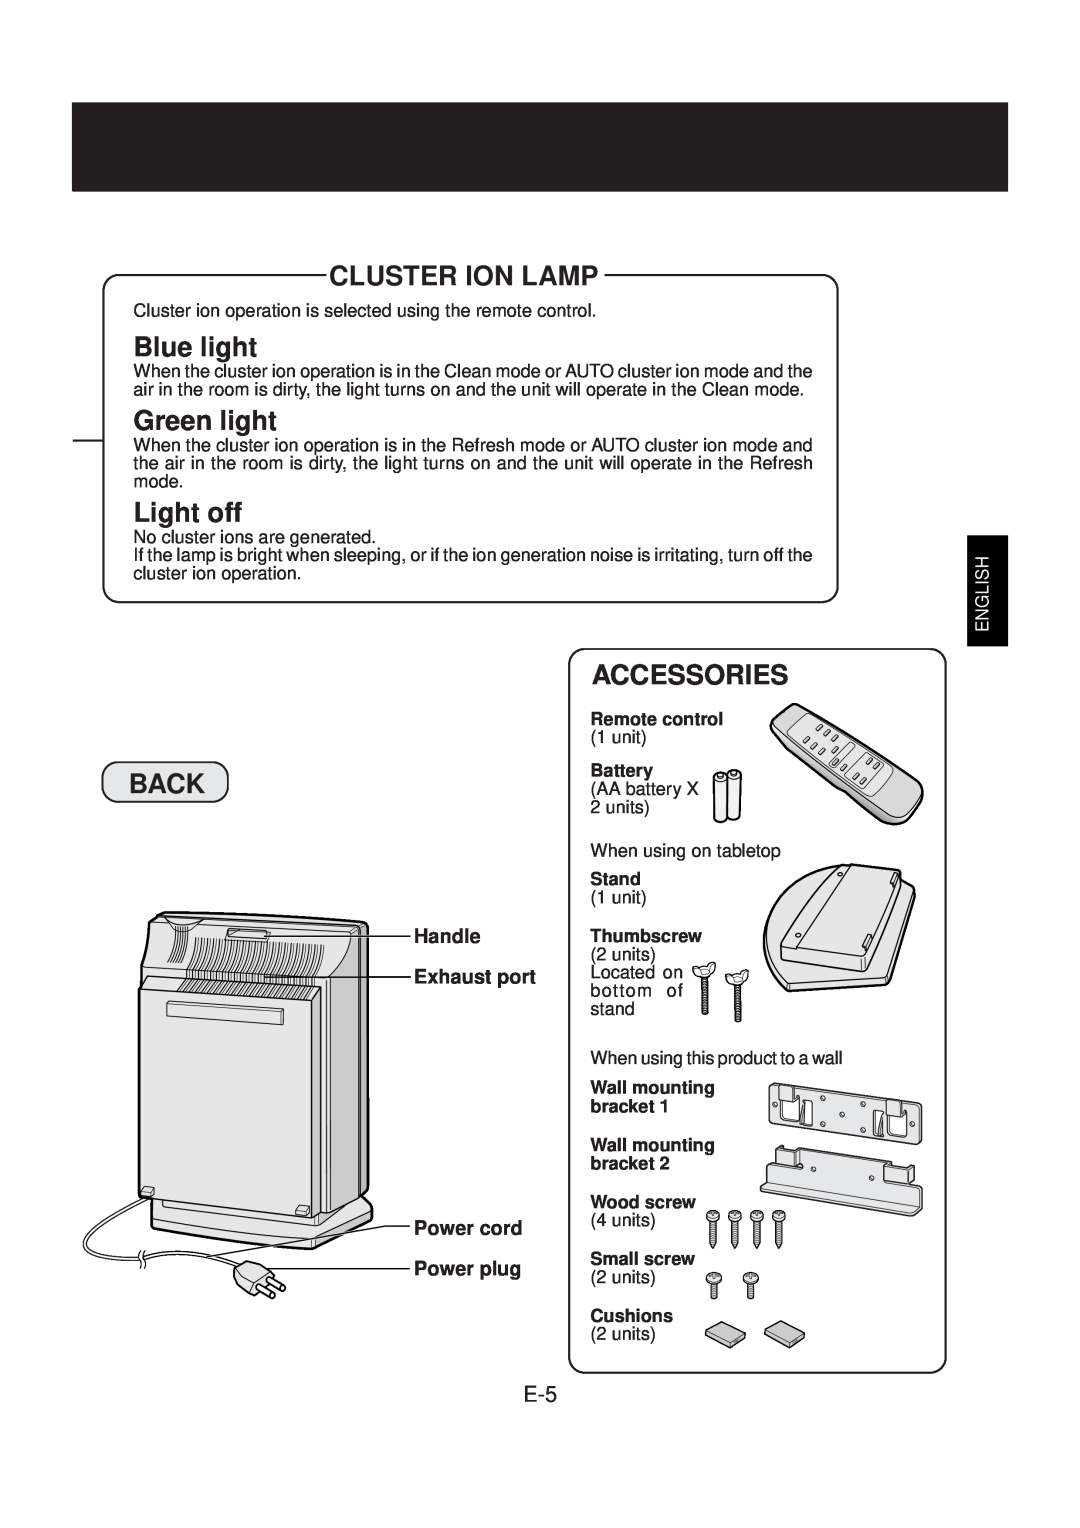 Sharp FU-40SE operation manual Cluster Ion Lamp, Blue light, Green light, Light off, Back, Accessories, English 